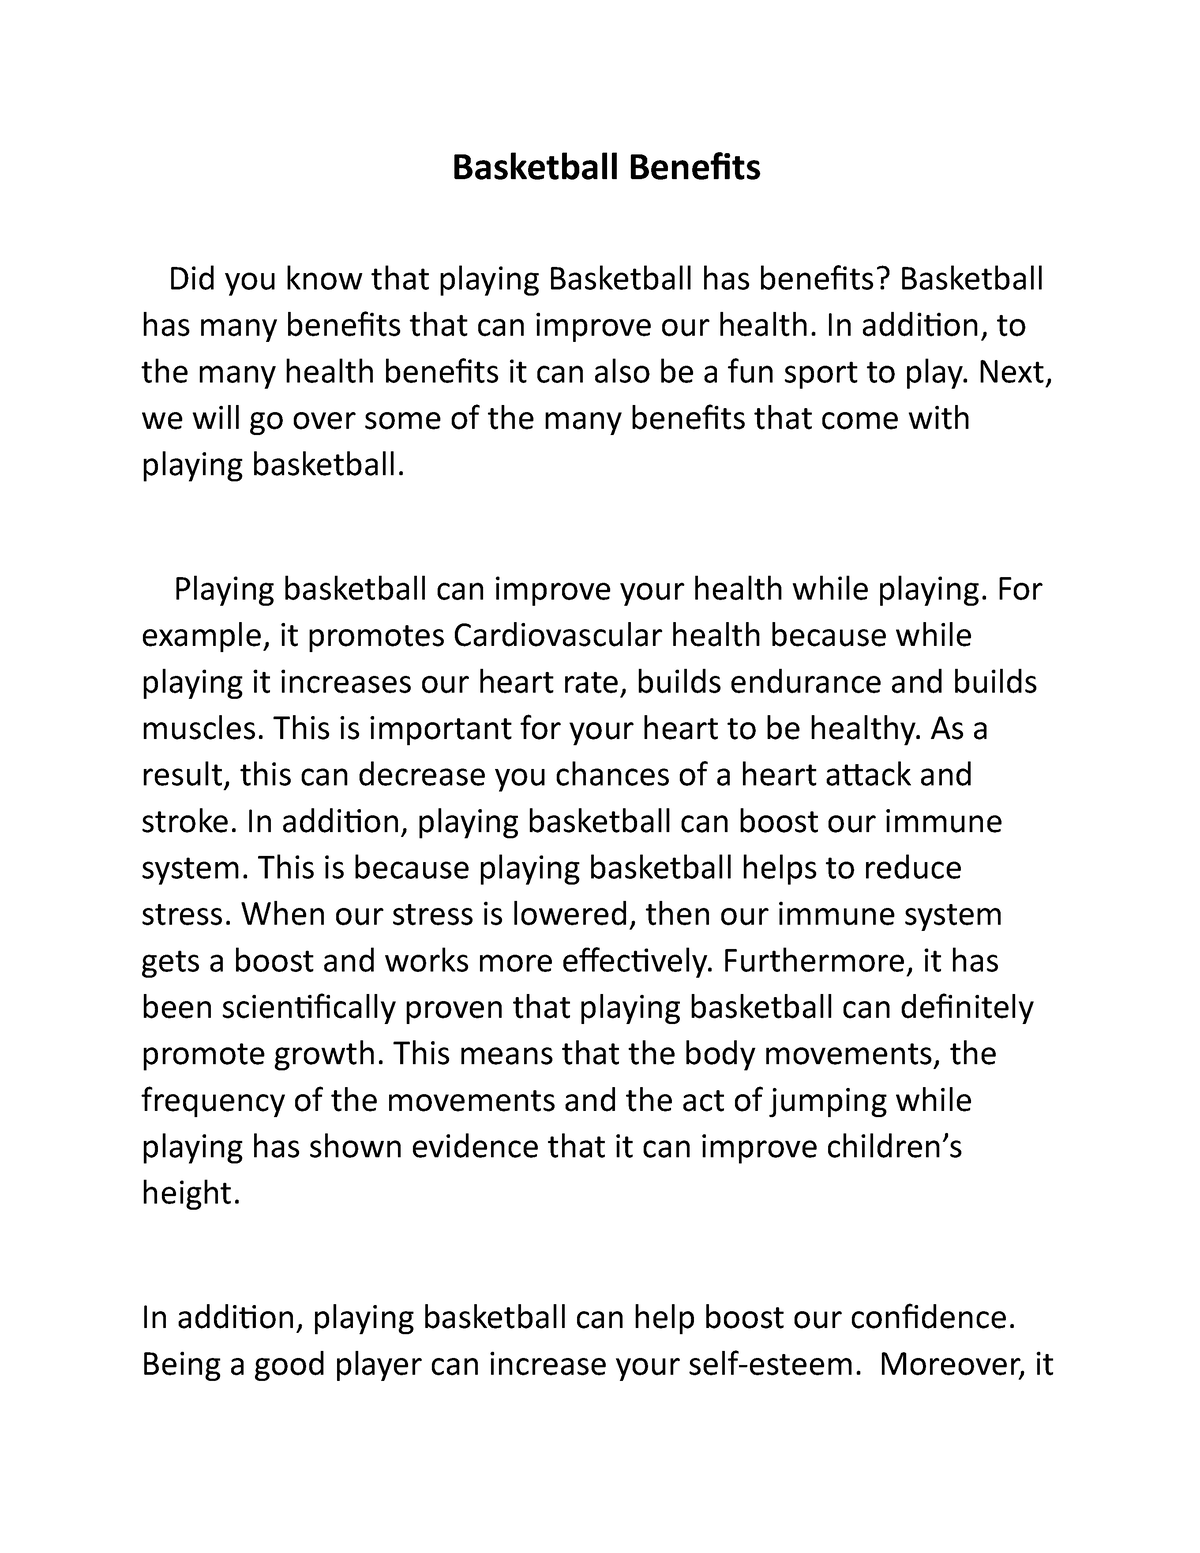 basketball benefits essay